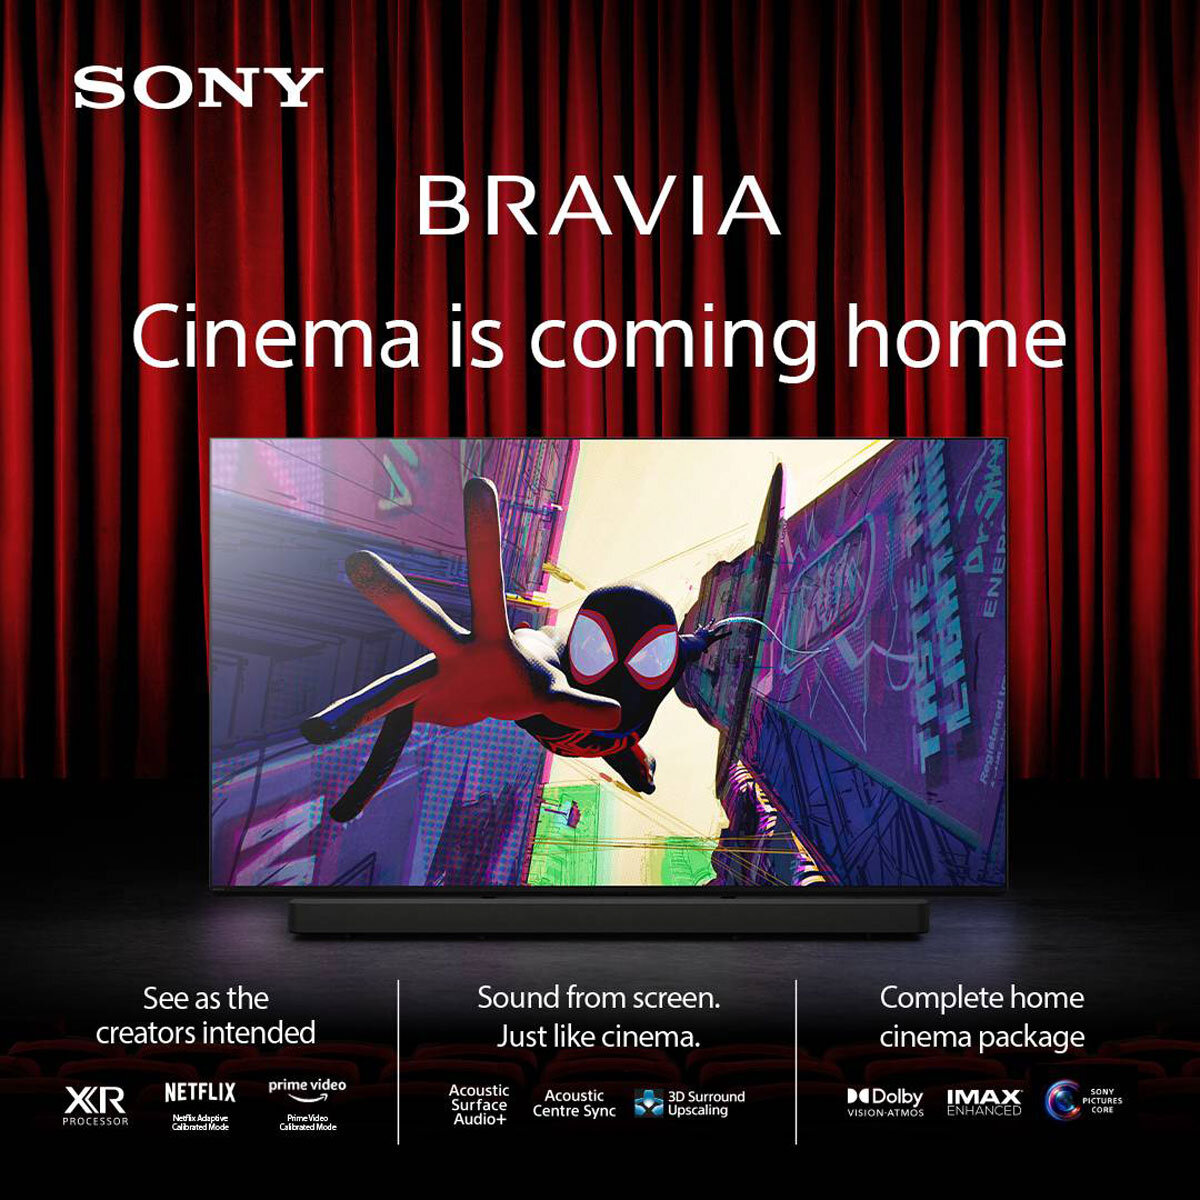 Buy Sony K85XR70PU 85 inch 4K QLED XR Mini LED TV at Costco.co.uk